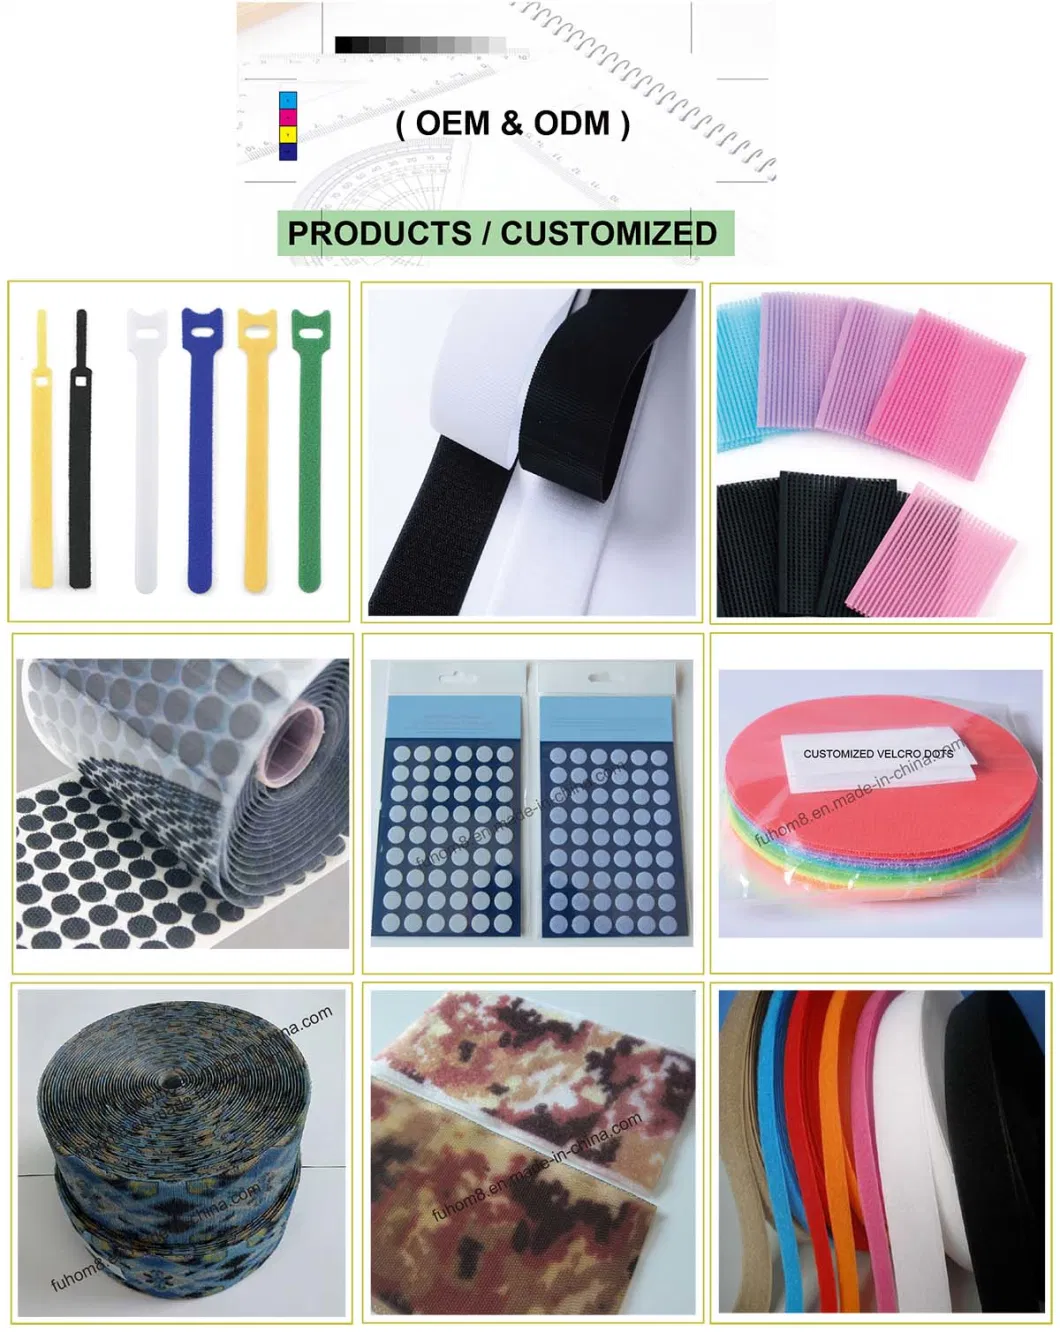 Durable Medical Nylon Soft Velcro Elastic Un-Napped Loop Band